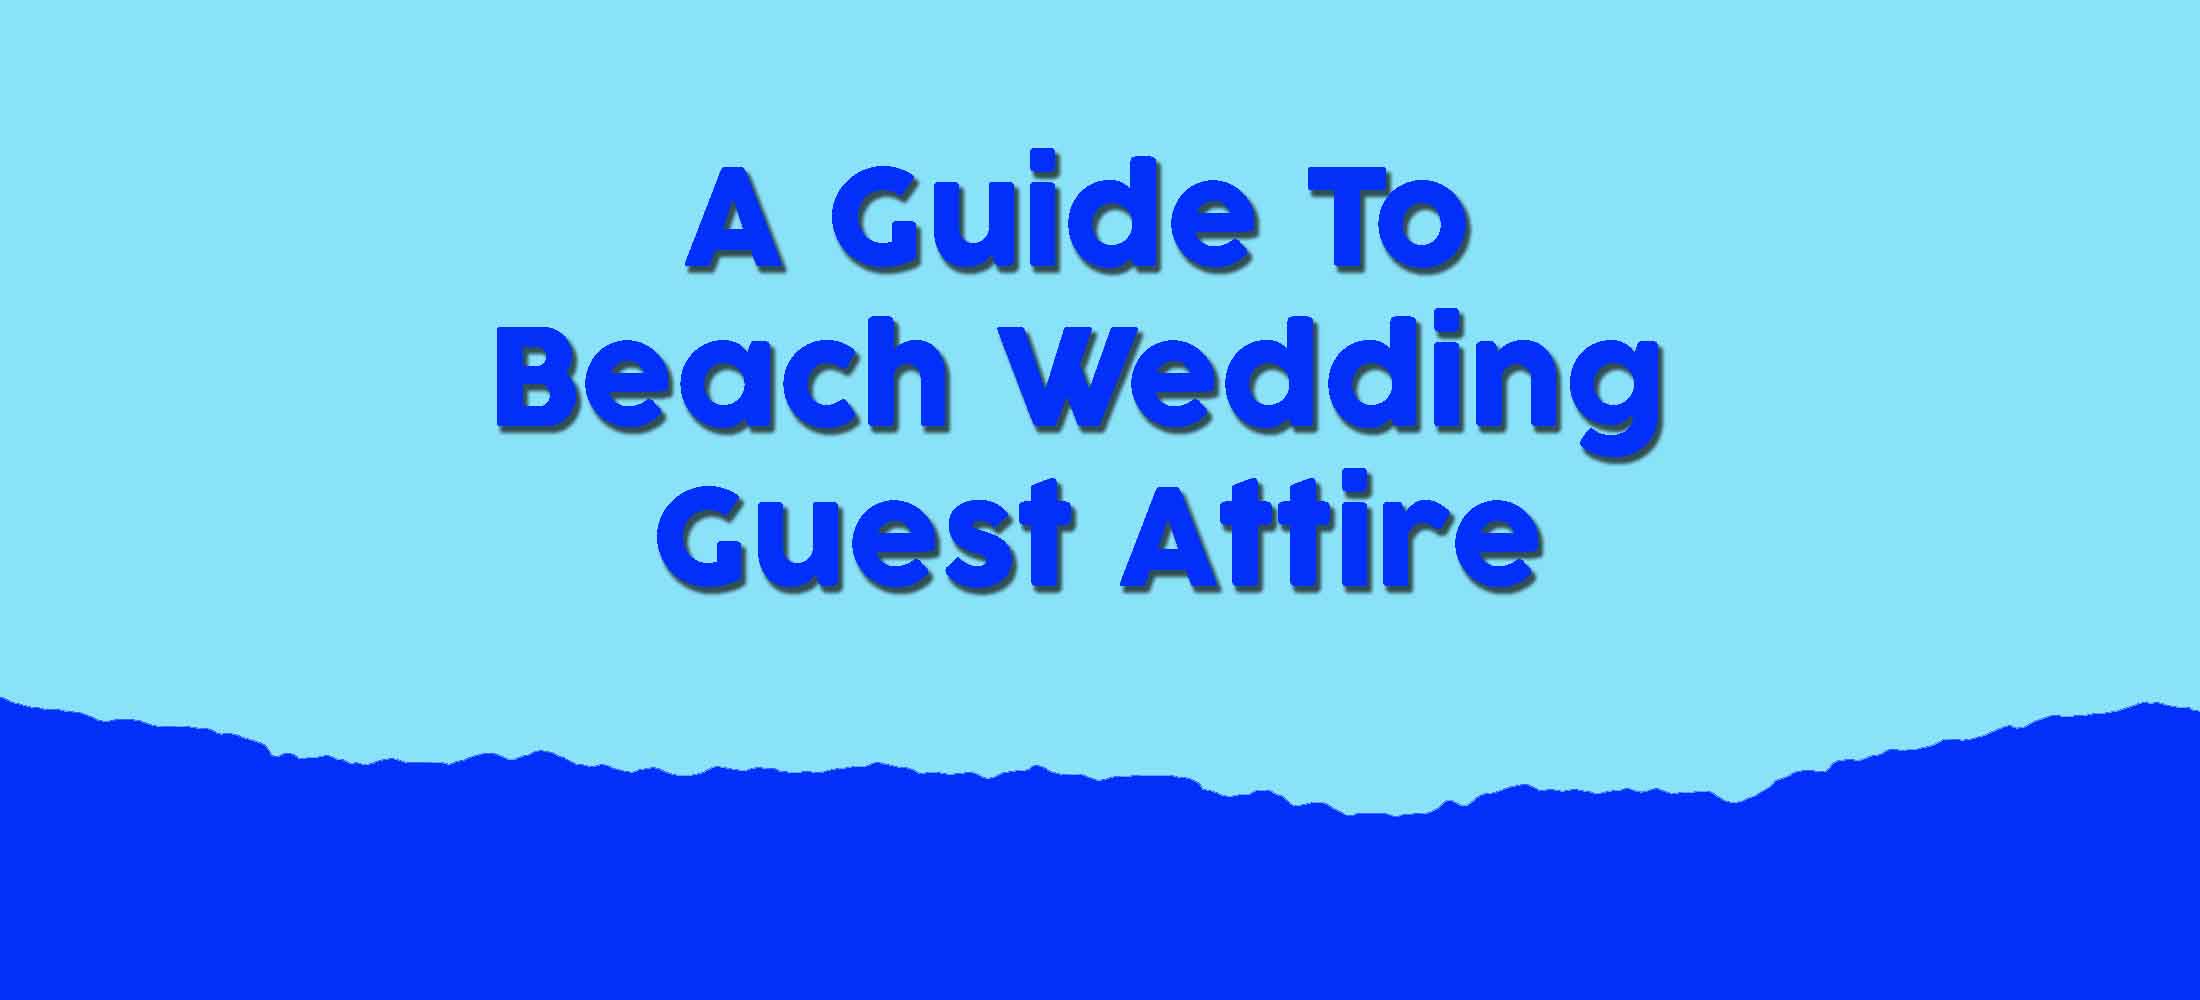 Wedding Guest Attire Guidelines